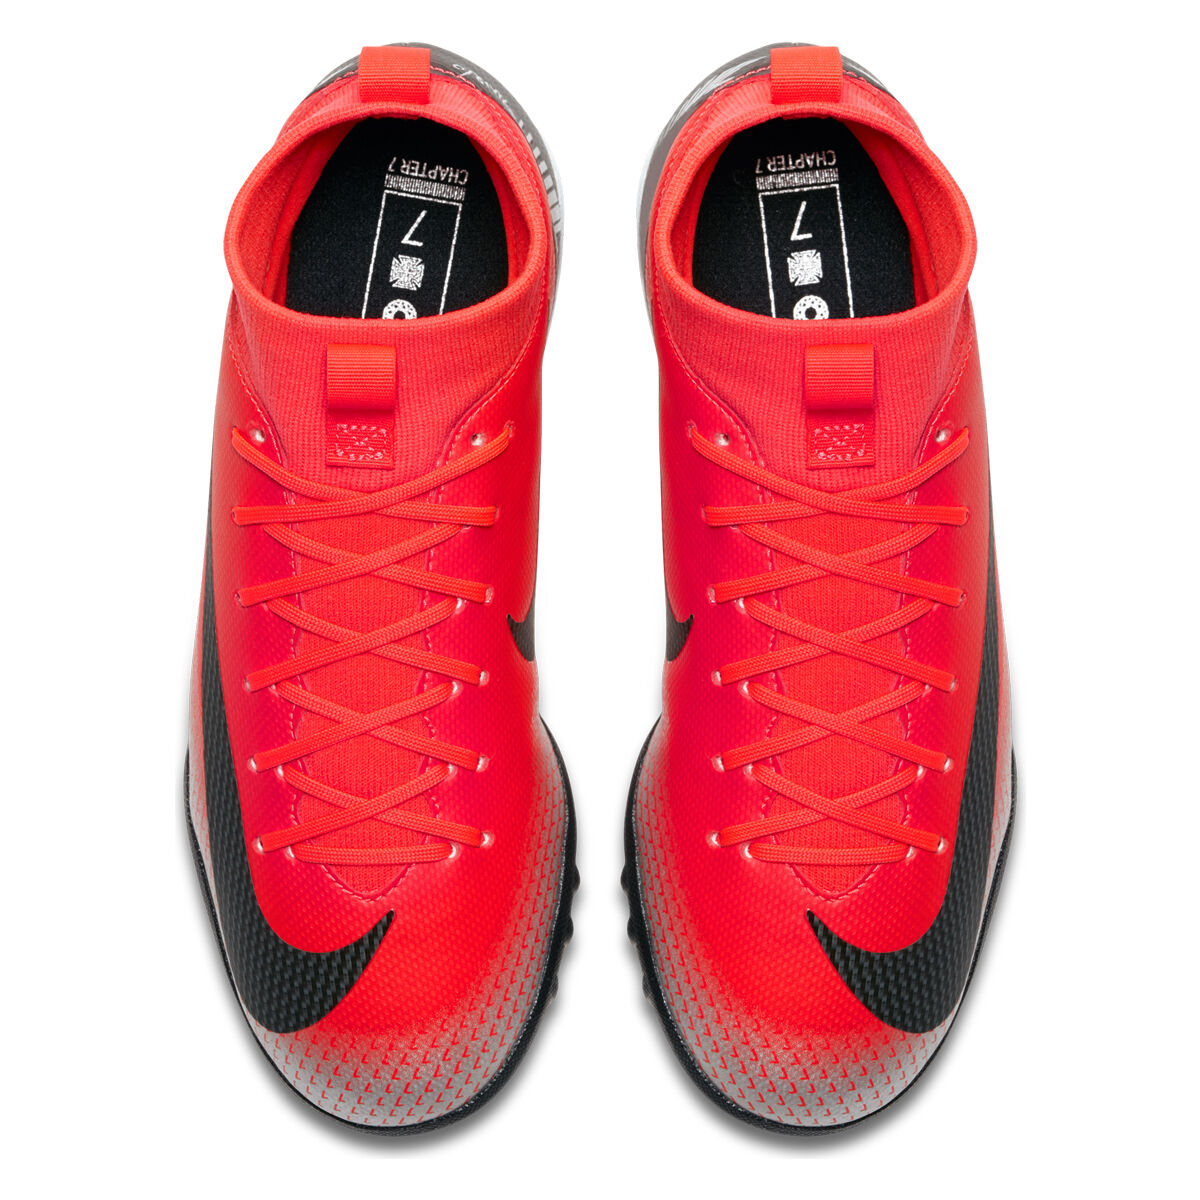 Nike Mercurial Superfly V 5 CR7 SE FG Boots eBay